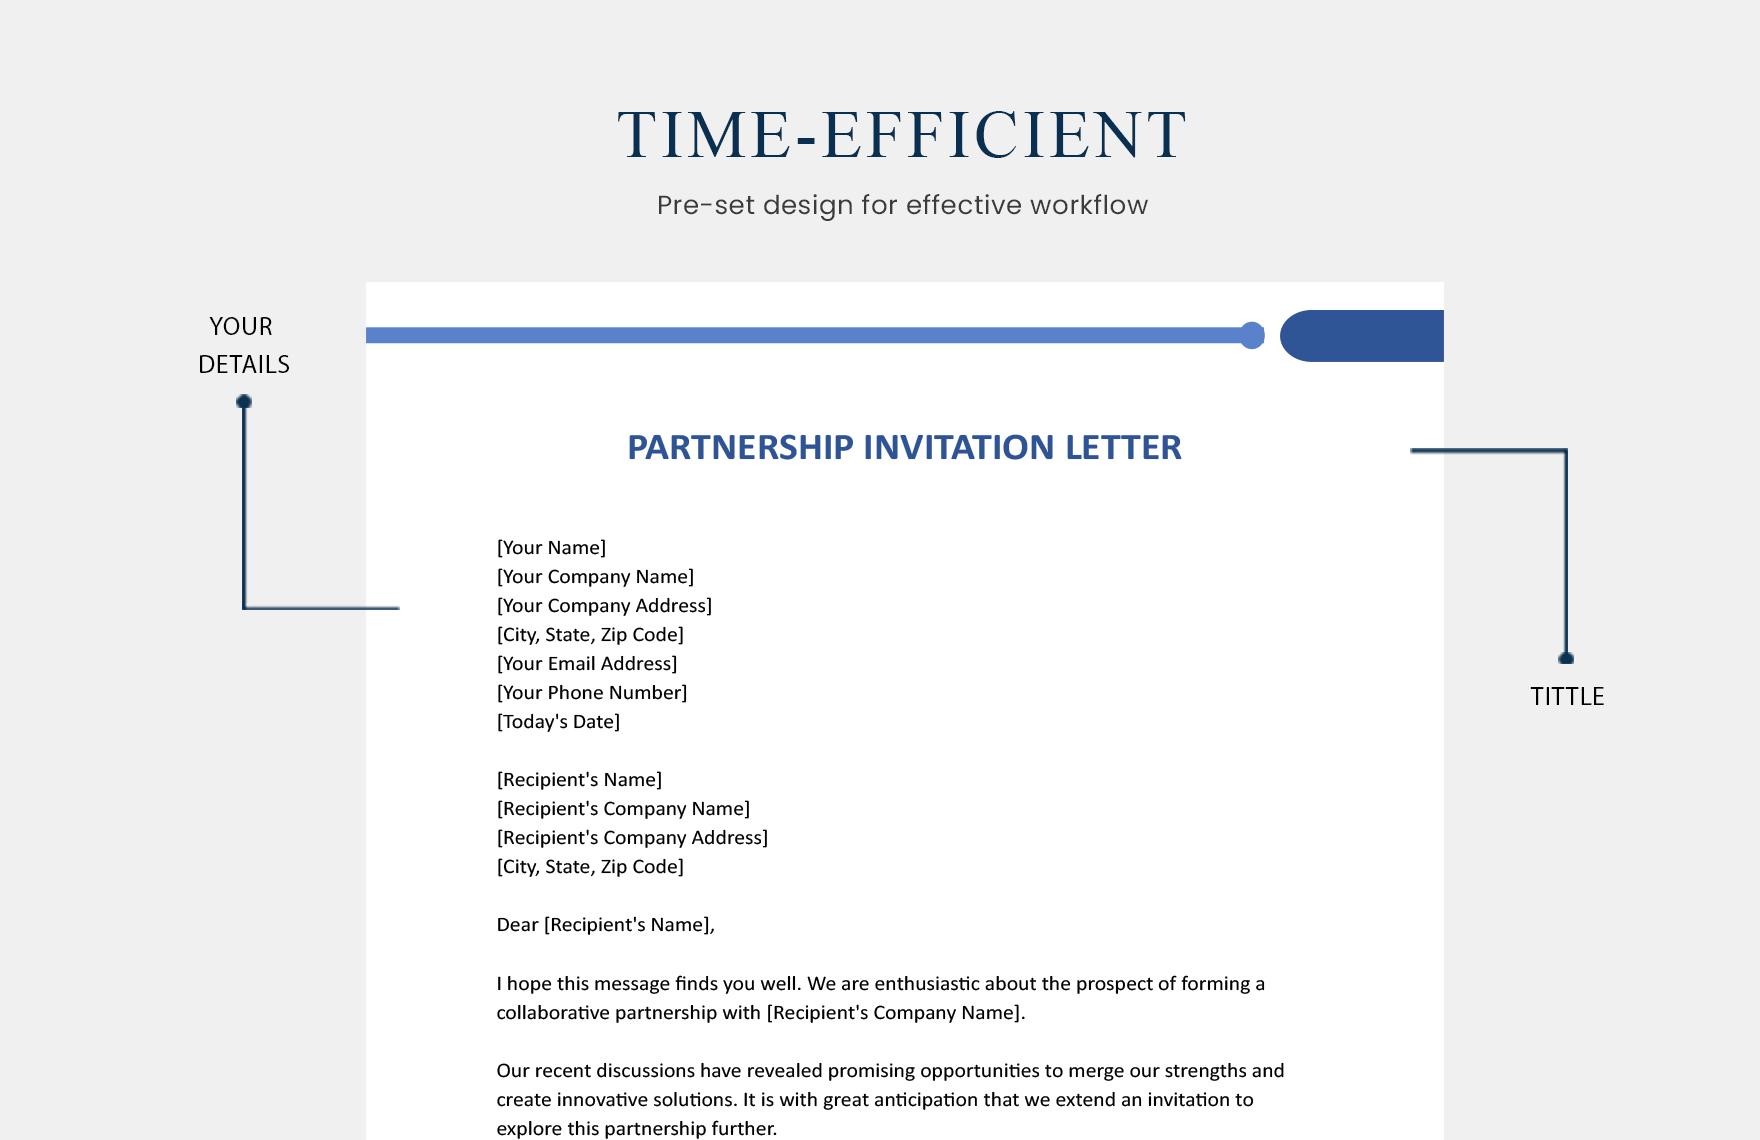 Partnership Invitation Letter